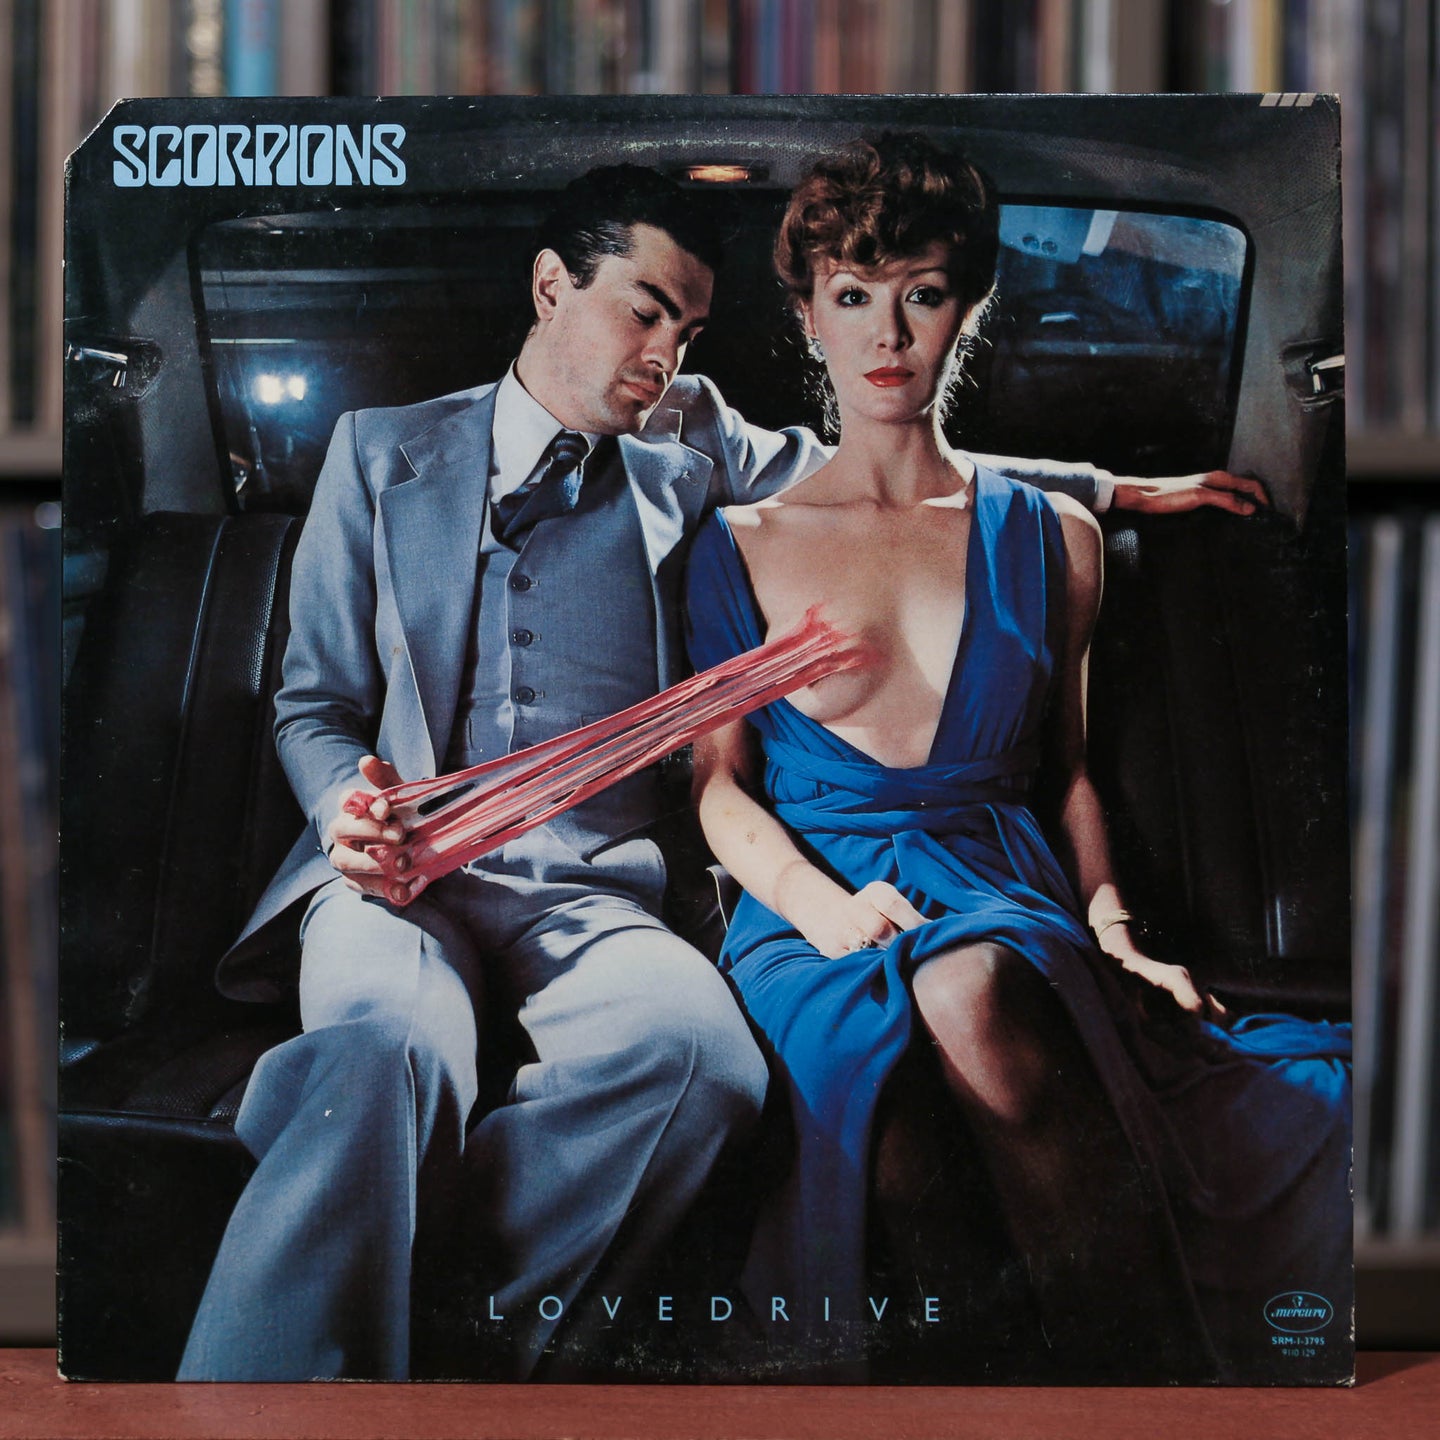 Scorpions - Lovedrive  - 1979 Mercury, VG+/VG+